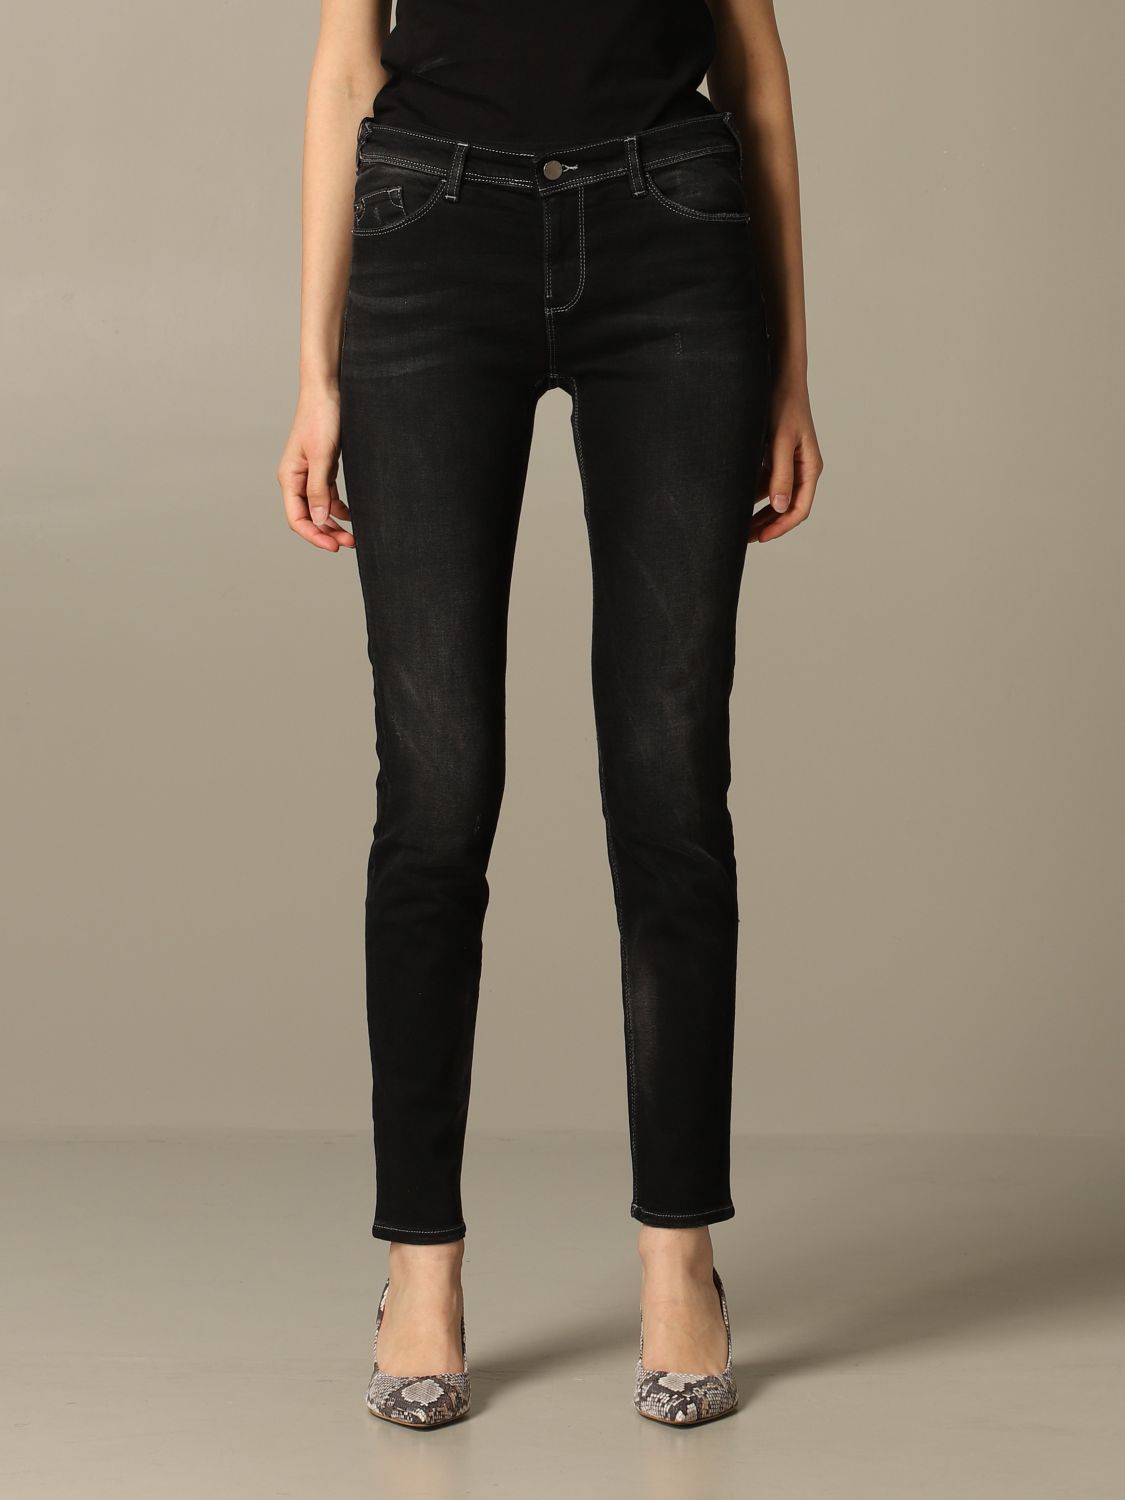 Jeans women Emporio Armani | Jeans 